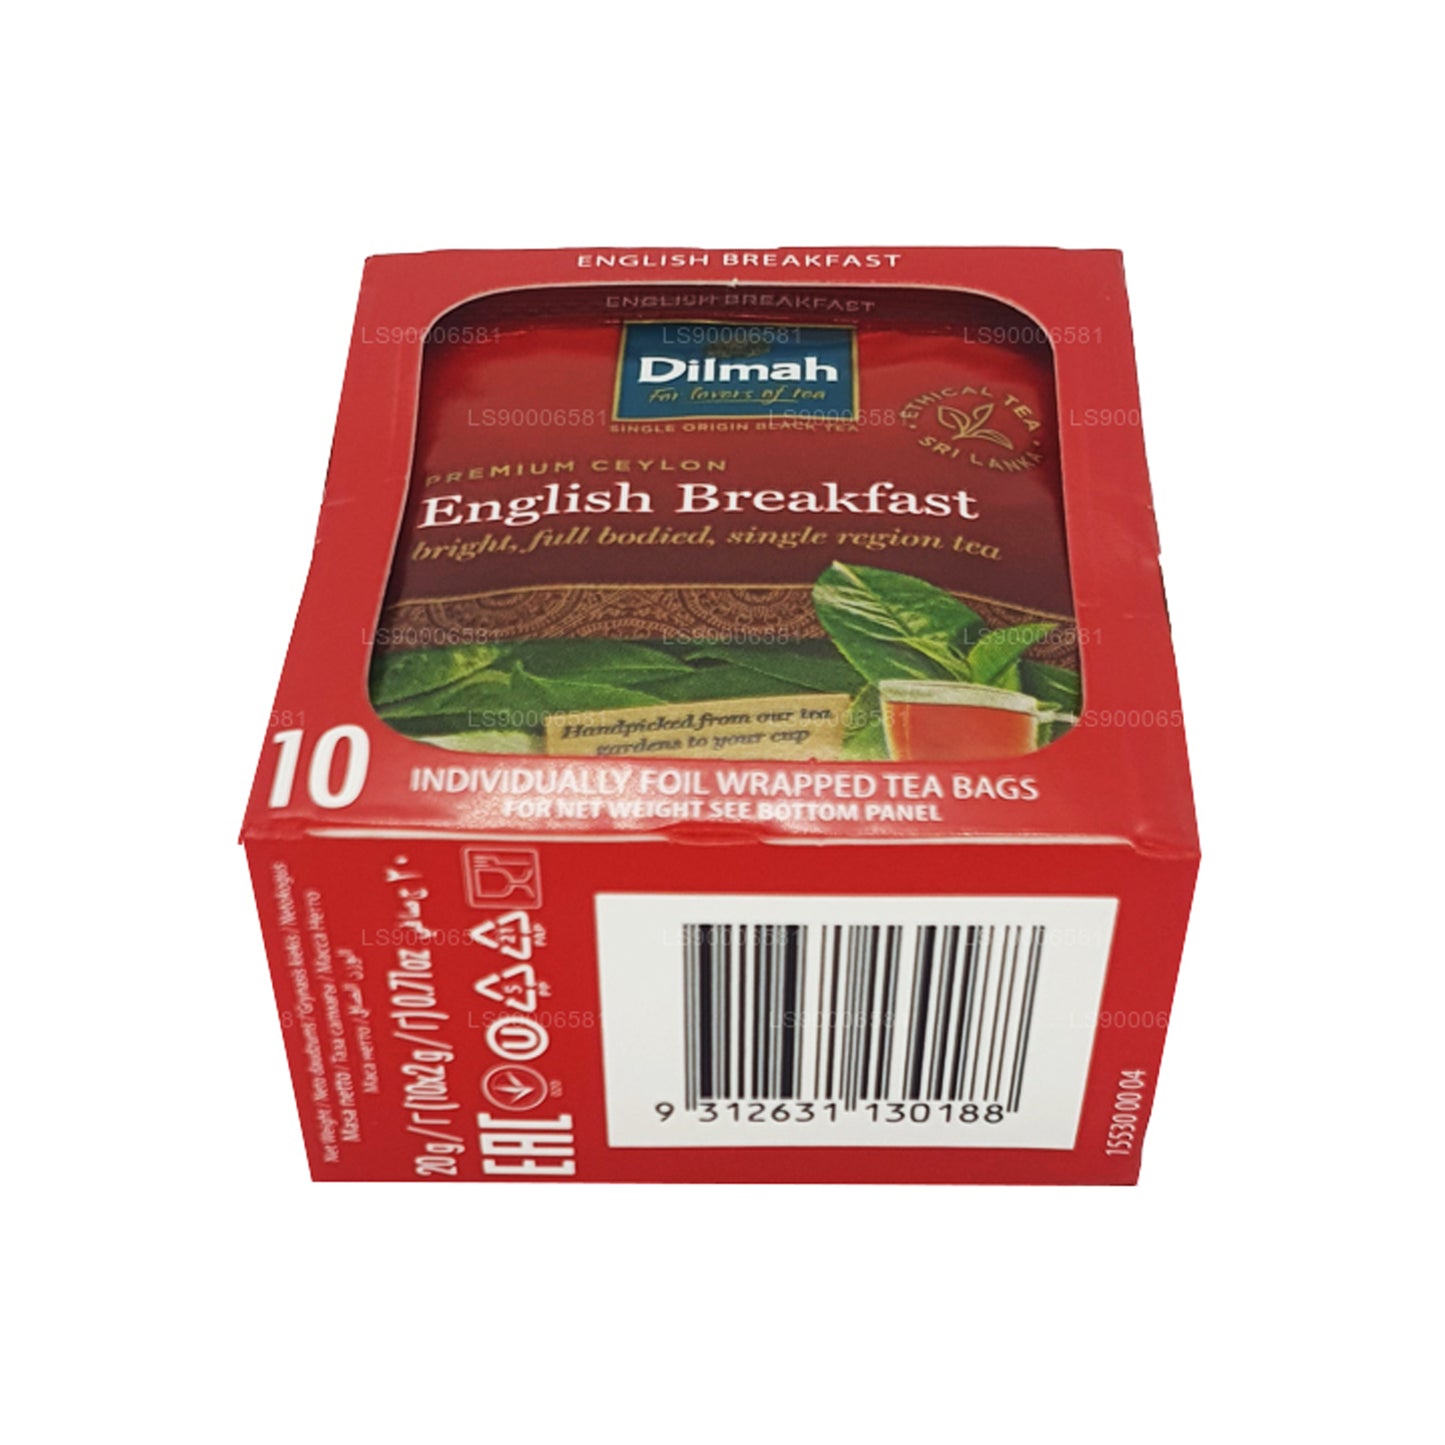 Dilmah English Breakfast Tea (20g) 10 Individually Foil Wrapped Tea Bags